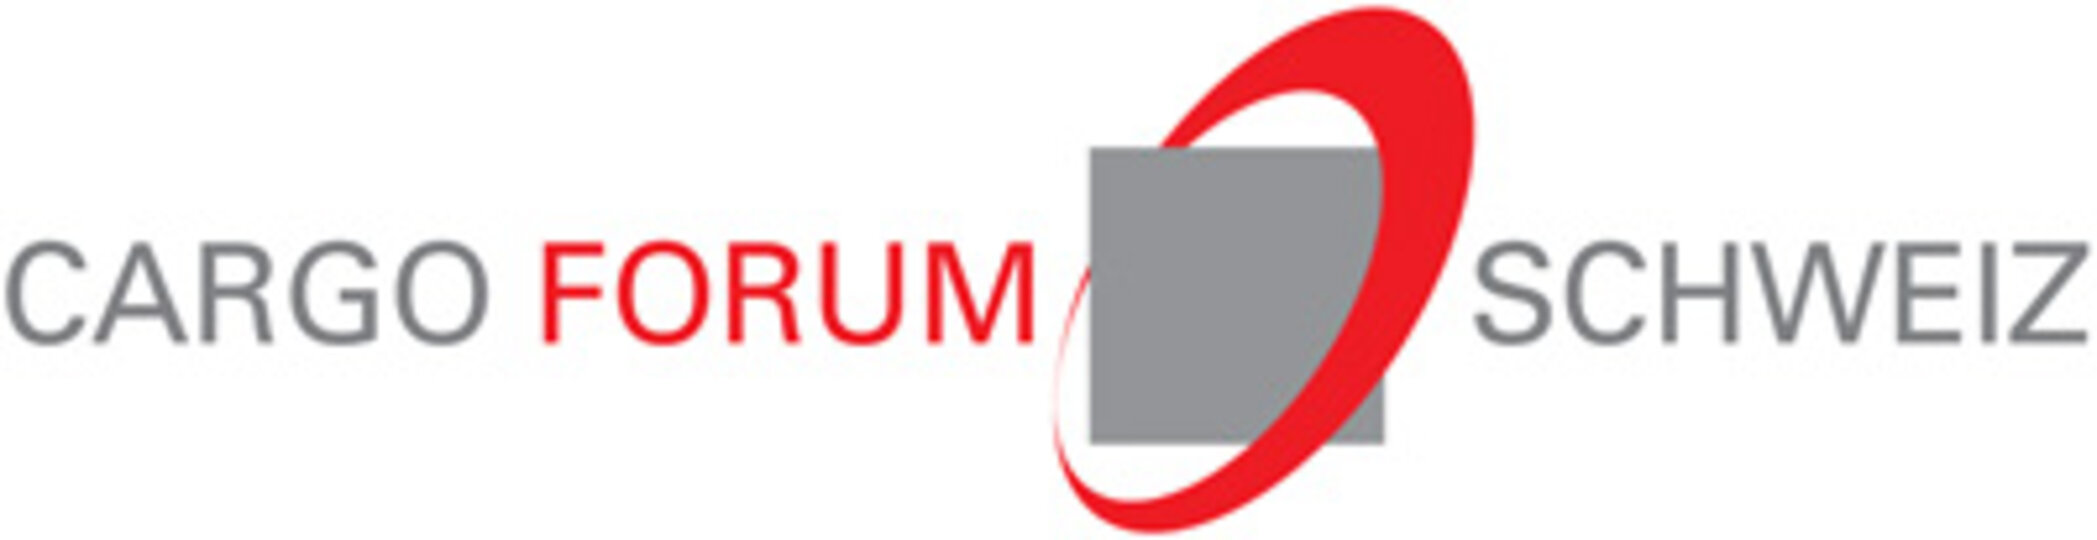 Cargo Forum Schweiz CFS